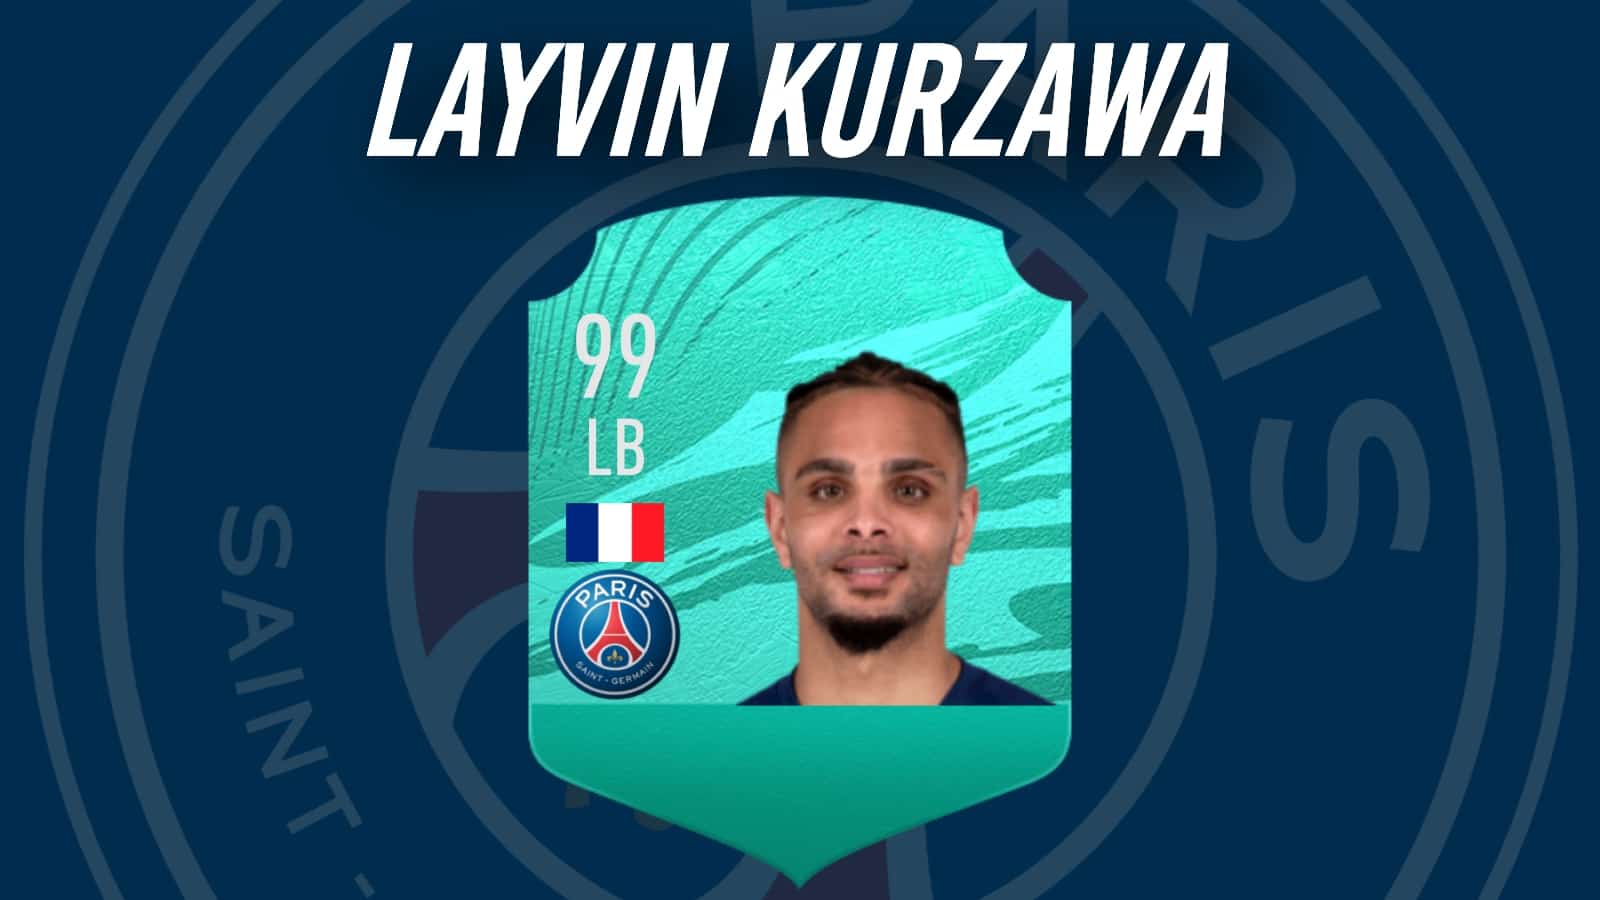 Layvin Kurzawa's FIFA 21 Ultimate Team has been revealed